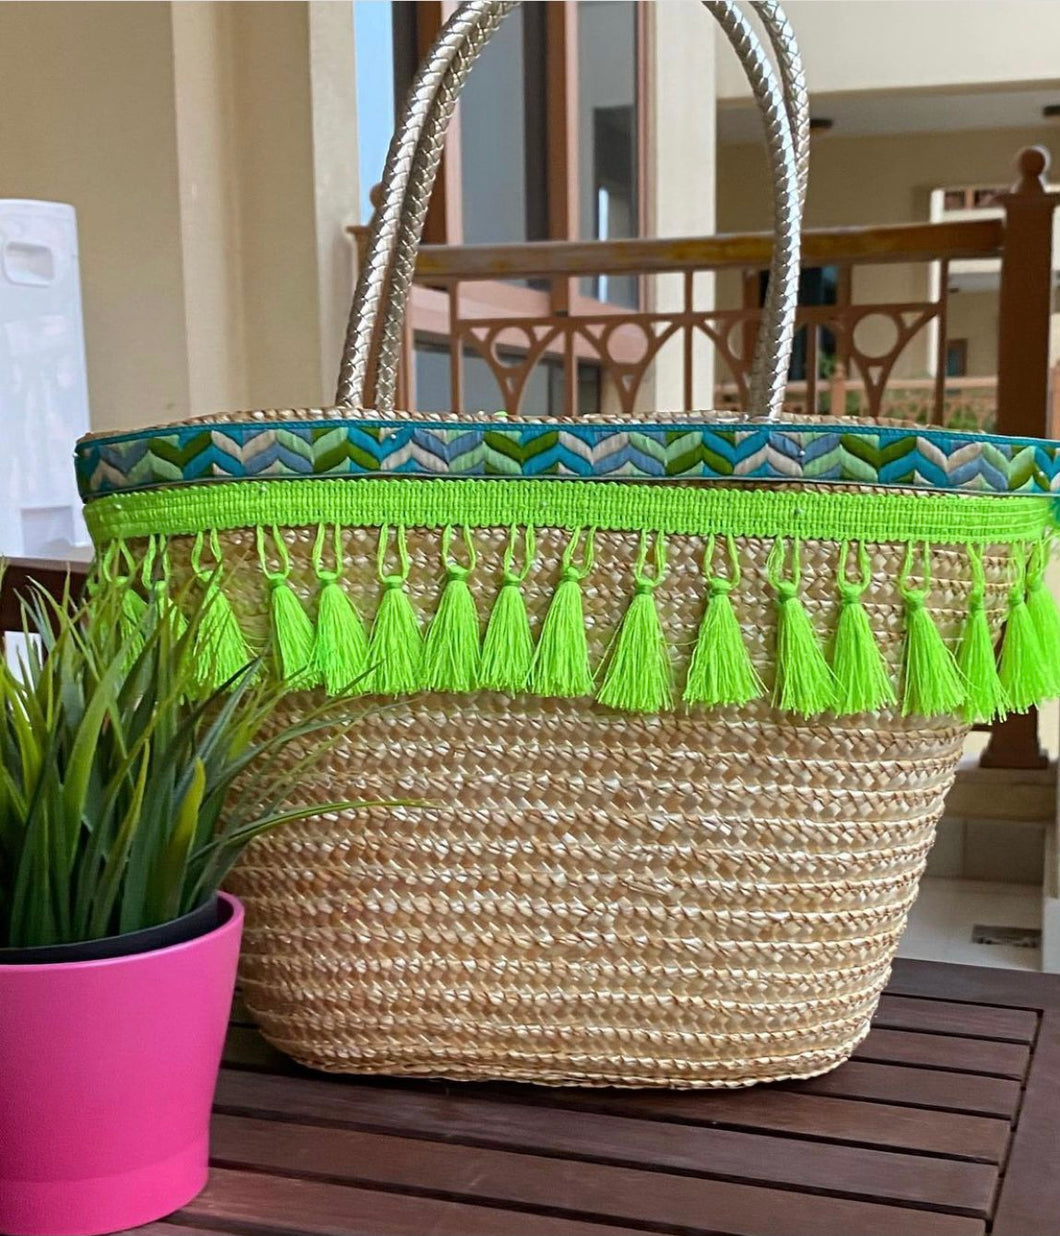 Straw basket with green tassel